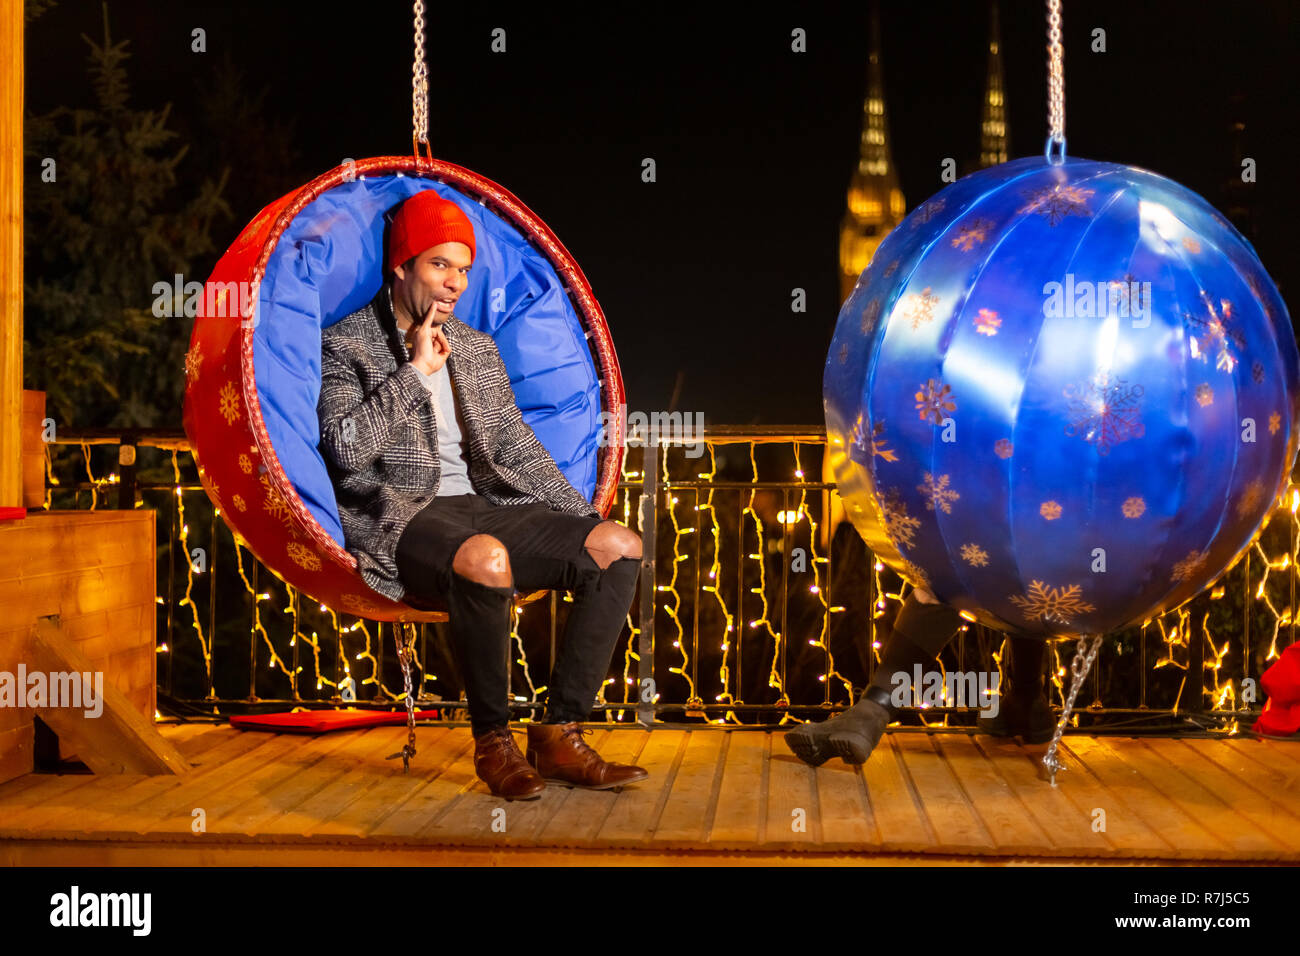 African American man posing for funny photo au marché de Noël, Zagreb, Croatie. Banque D'Images